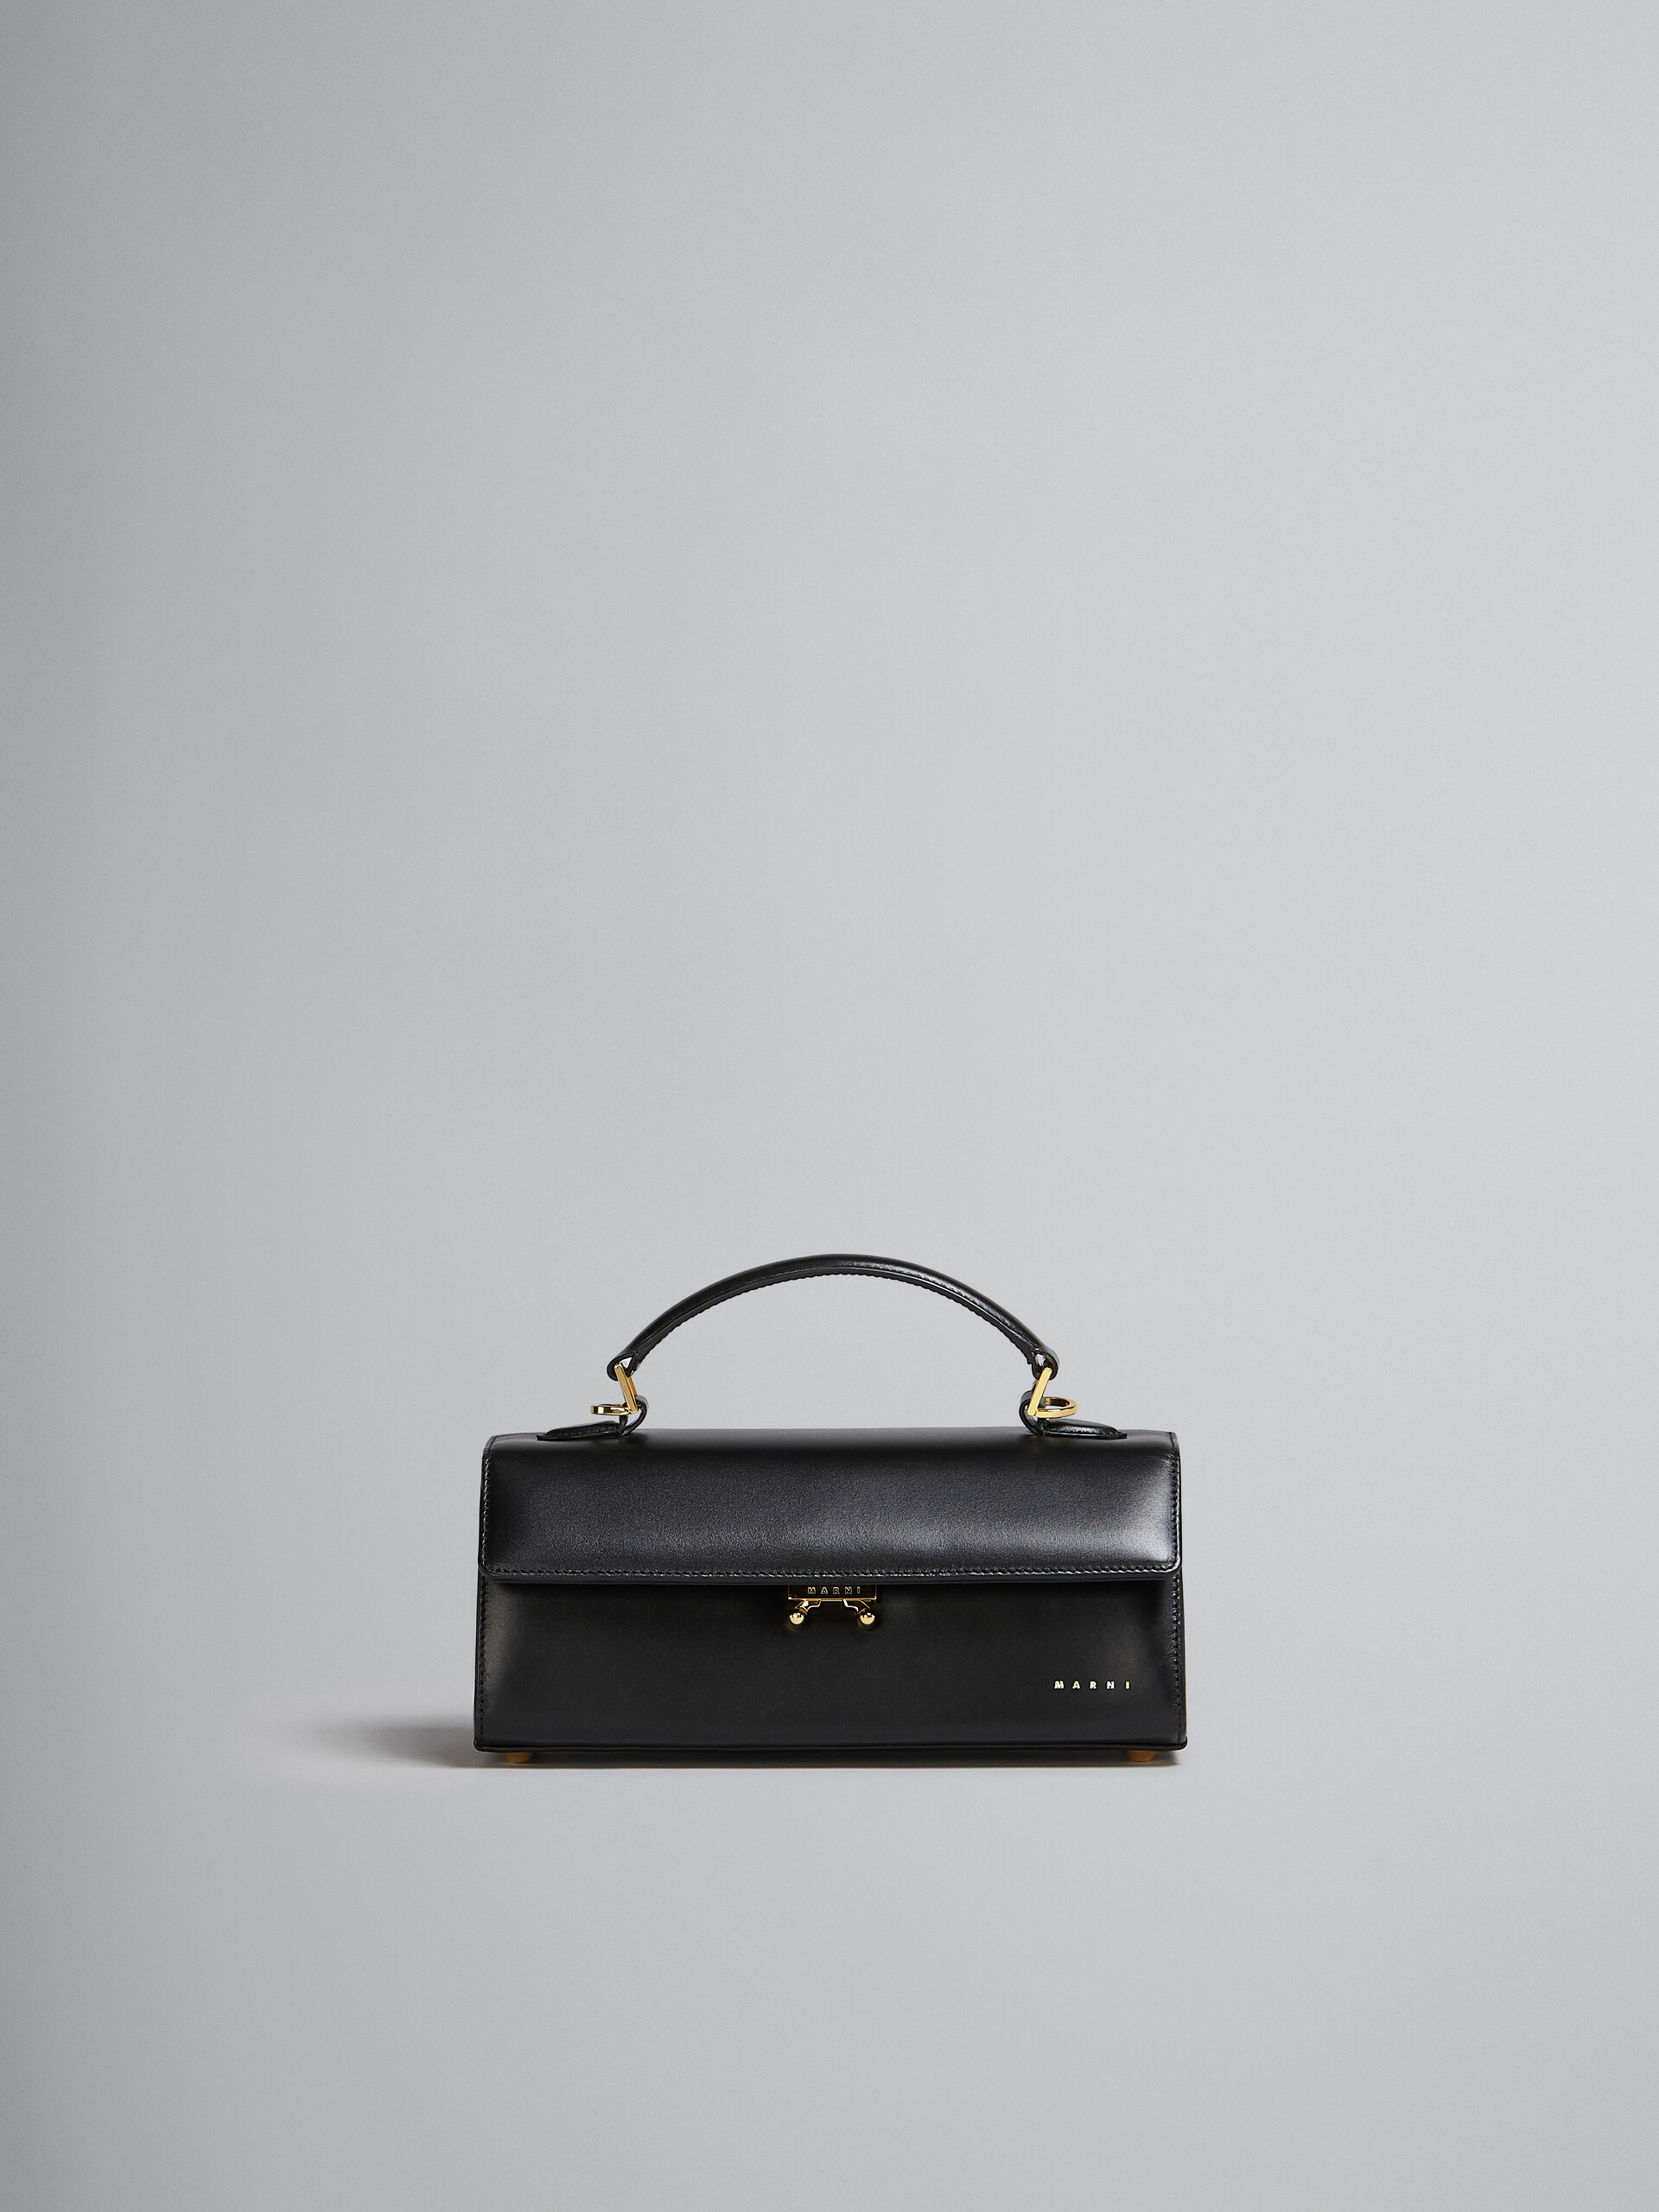 Relativity Medium Bag in black leather - Handbags - Image 1